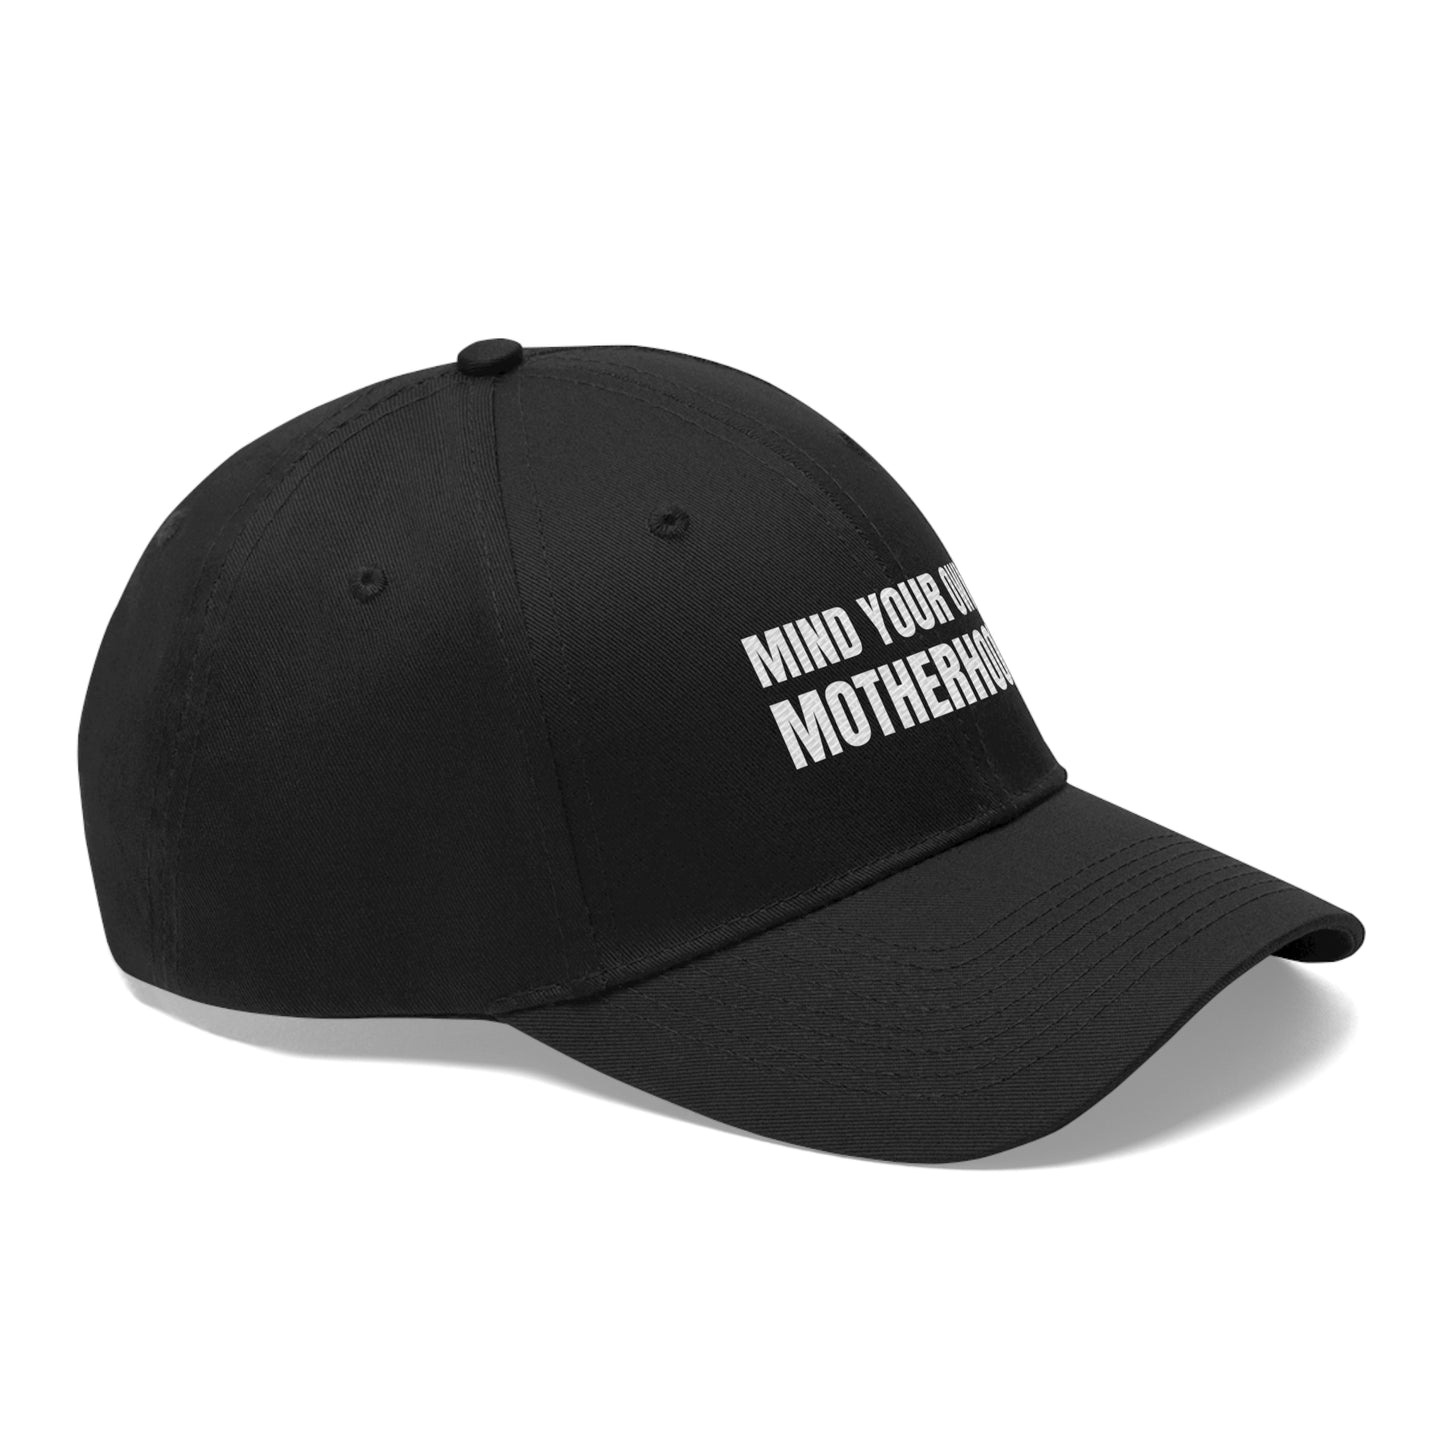 Mind Your Own Motherhood Hat